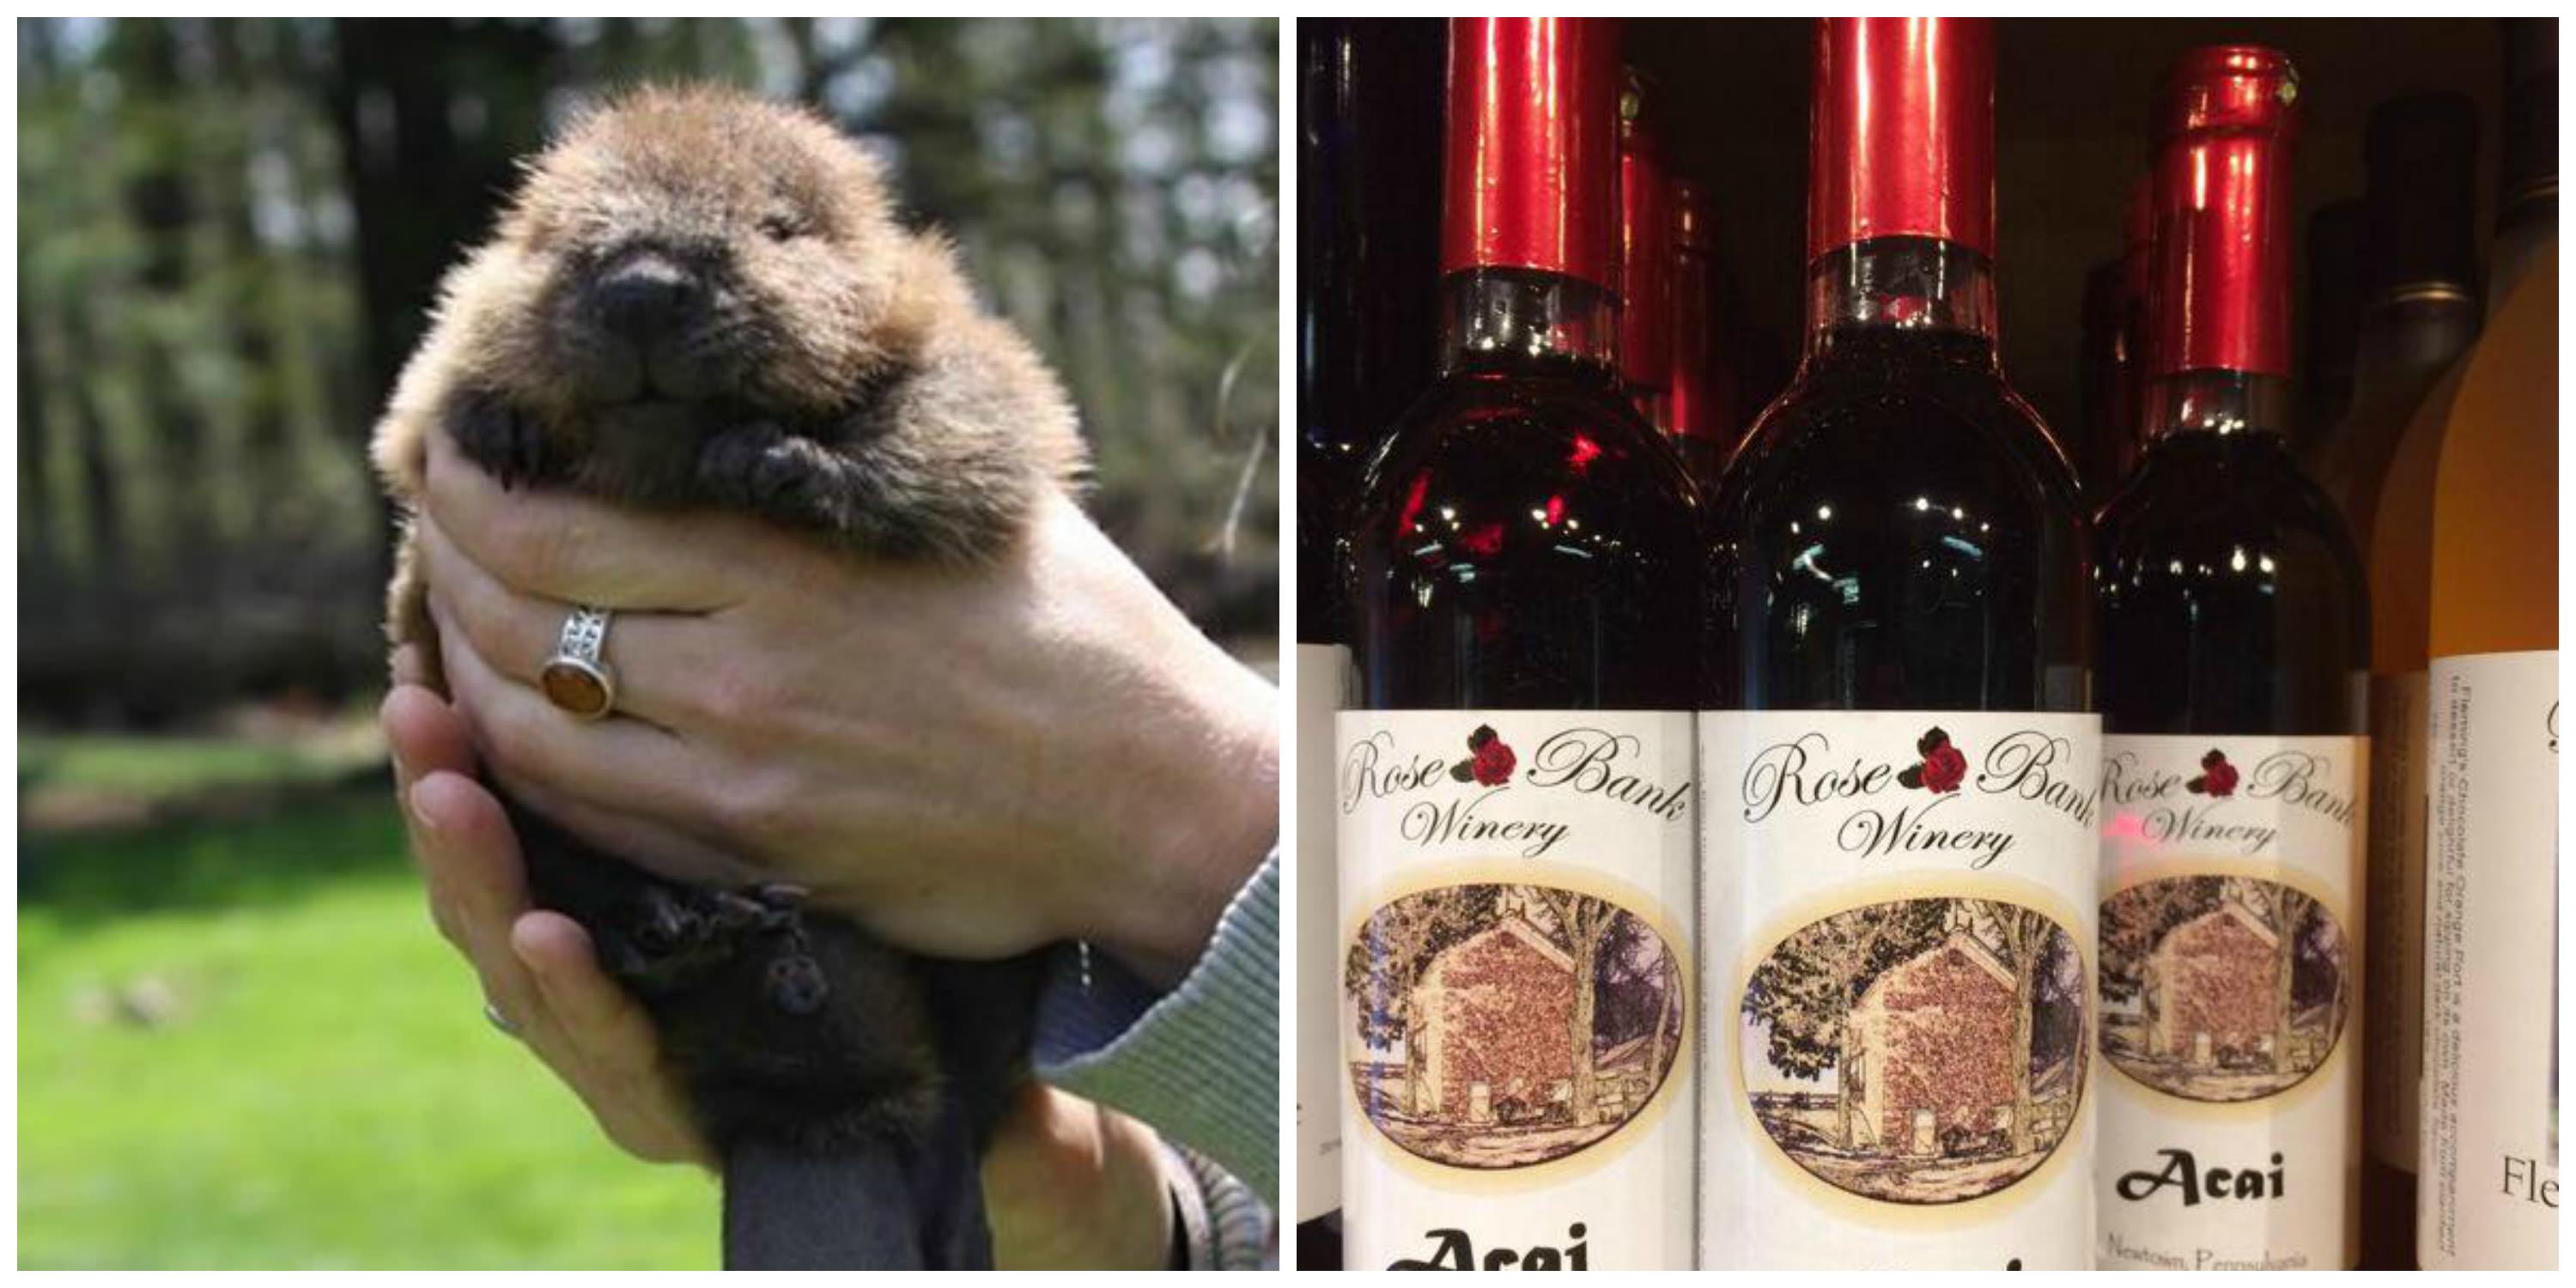 Aark wildlife animal and Rose Bank Winery wines